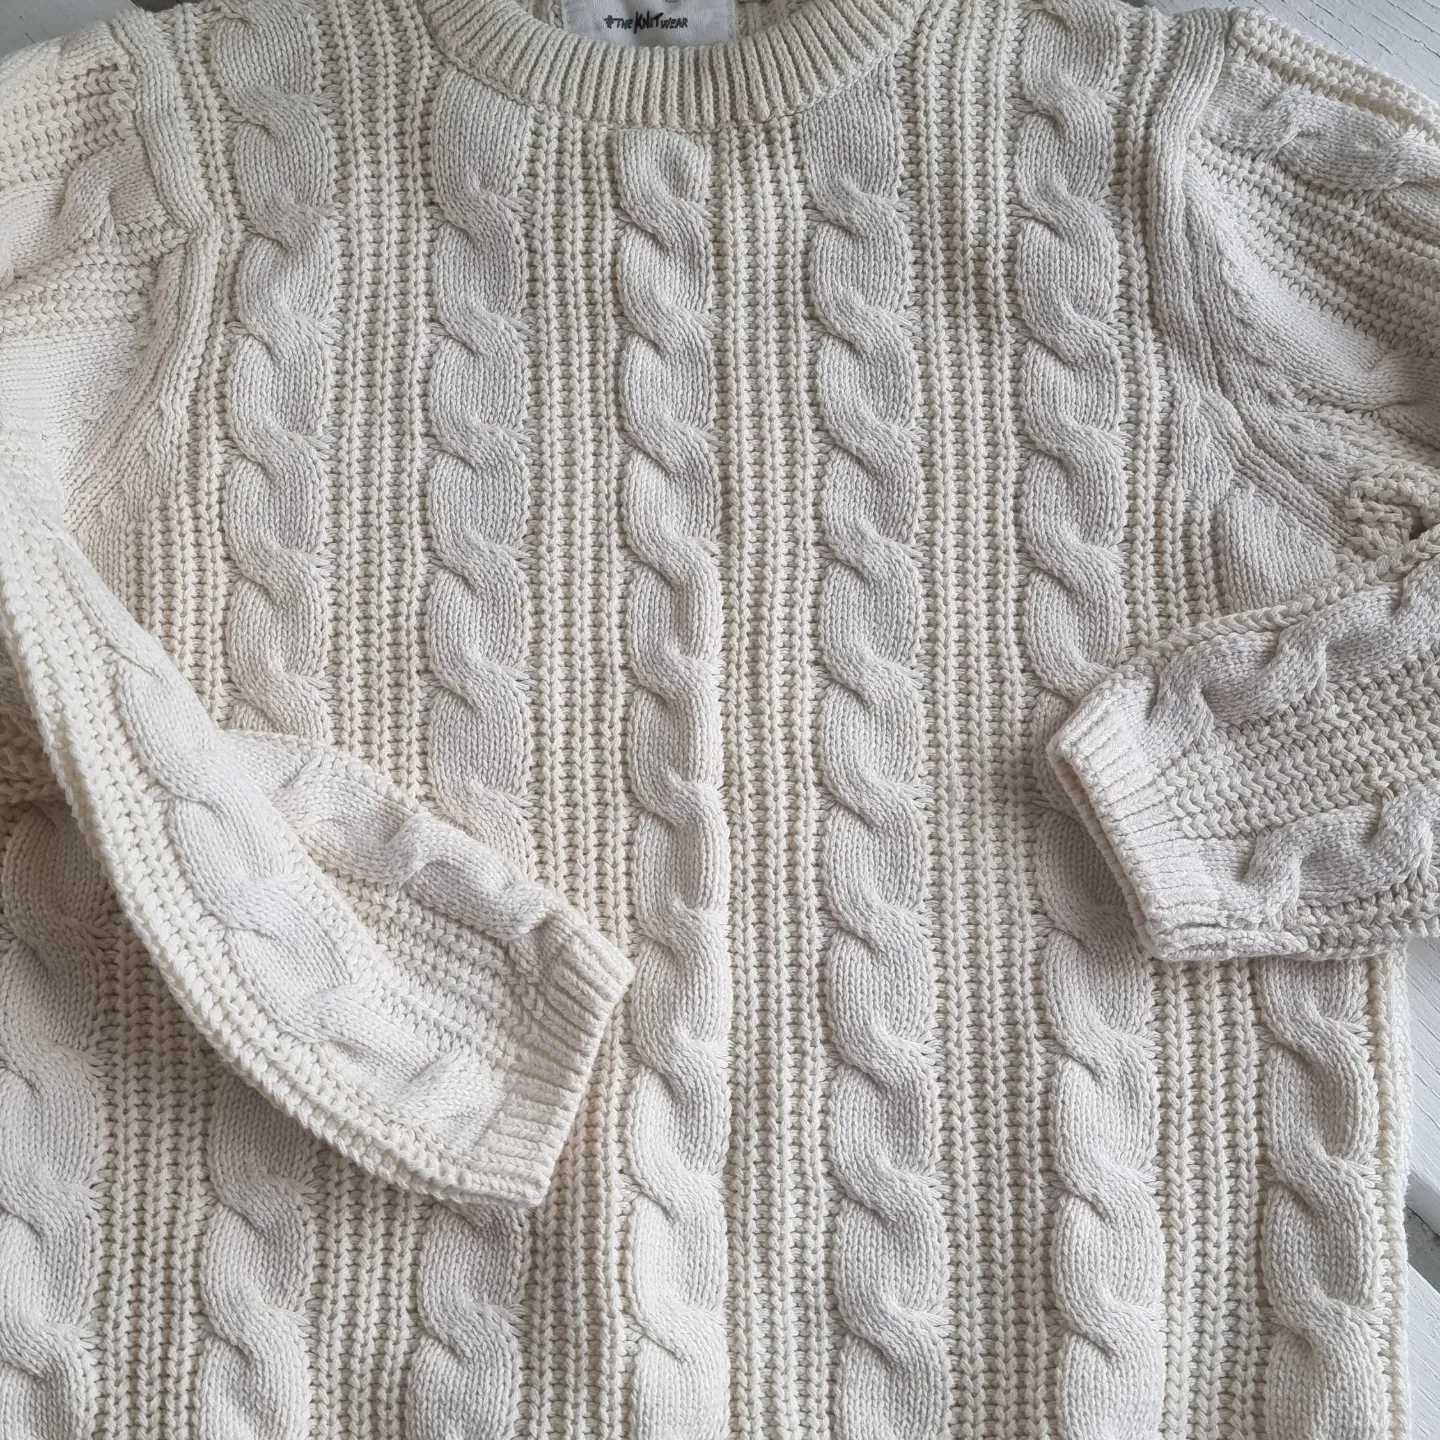 Бял пуловер Zara, неносен, 122см